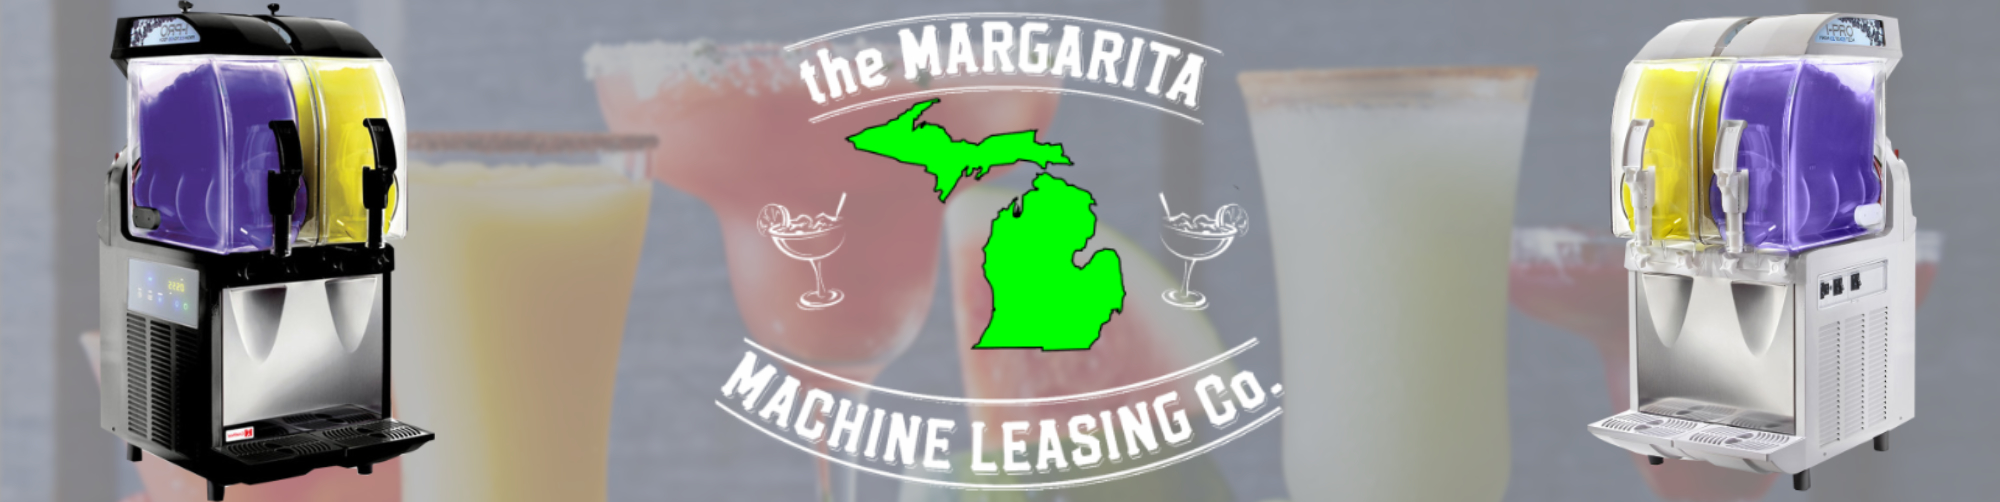 Contact The Margarita Machine Leasing Company